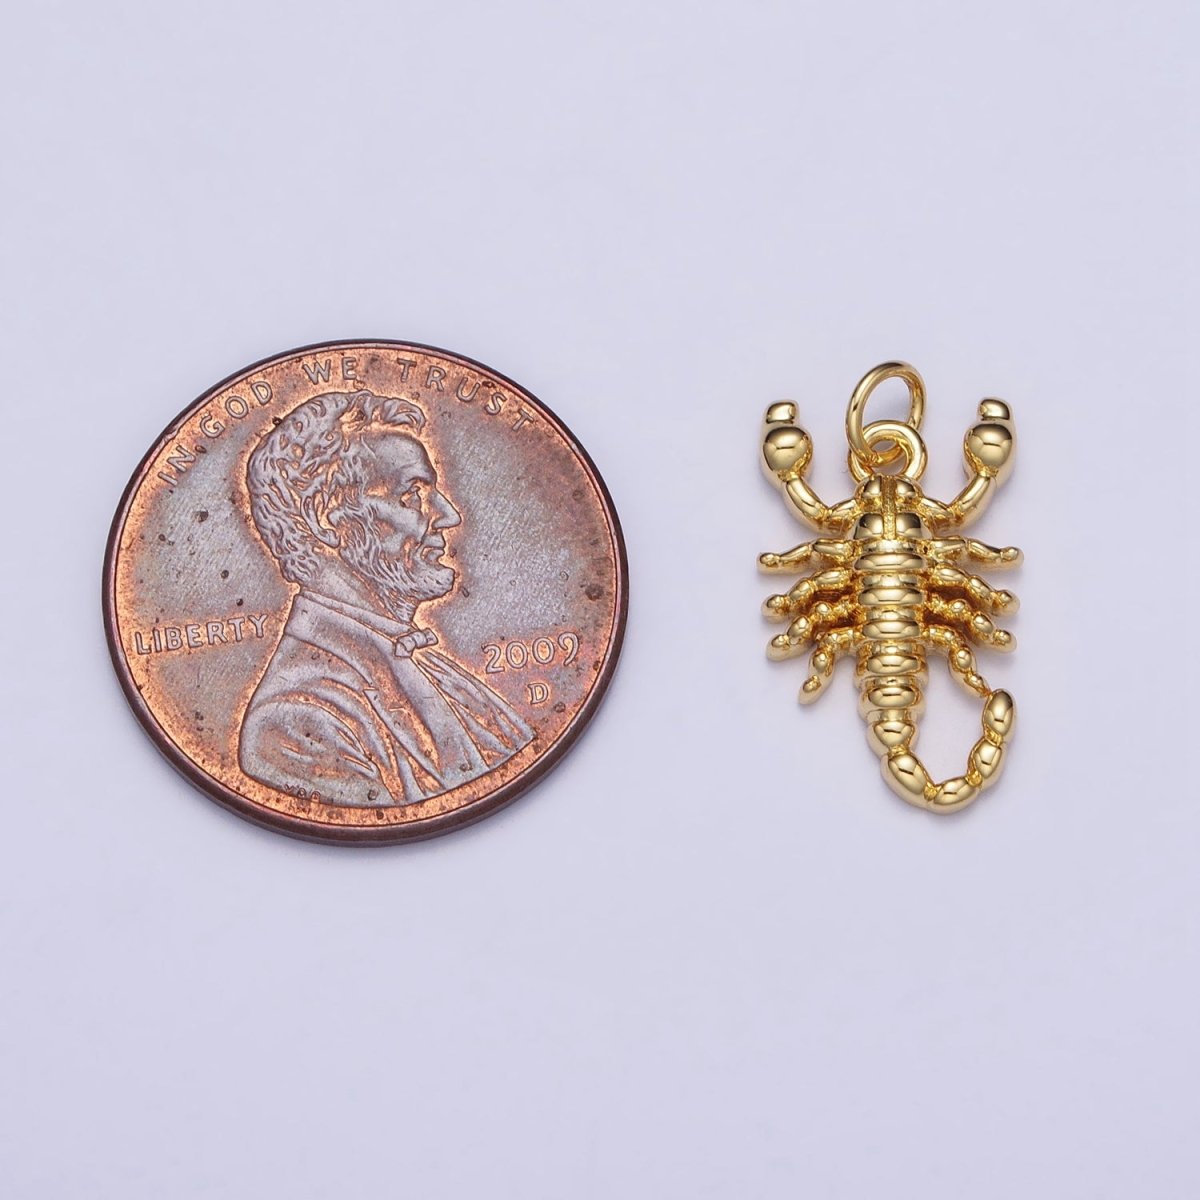 Dainty Gold Scorpion Charm Insect Animal Desert Charm AC-670 AC-671 - DLUXCA